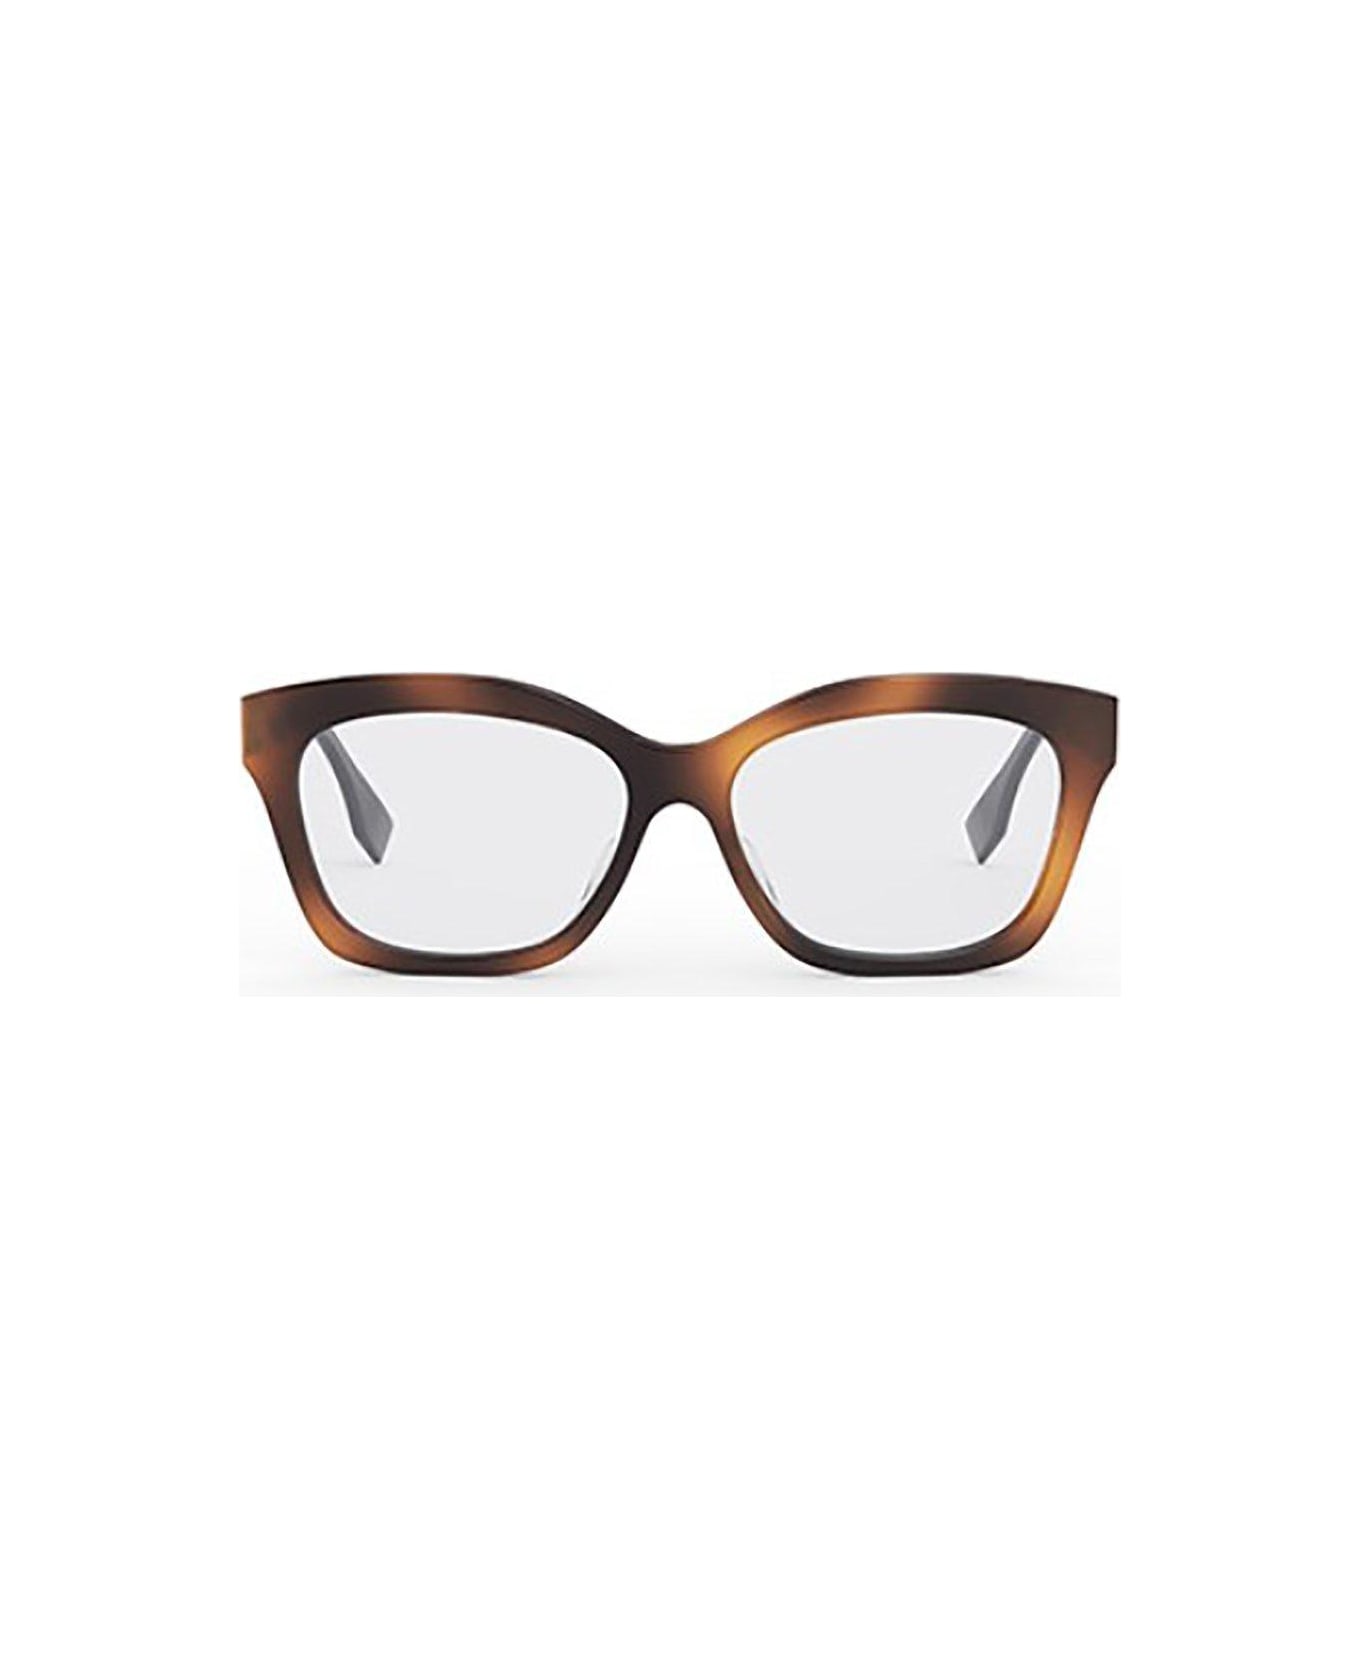 Fendi Eyewear Oval Frame Glasses - 053